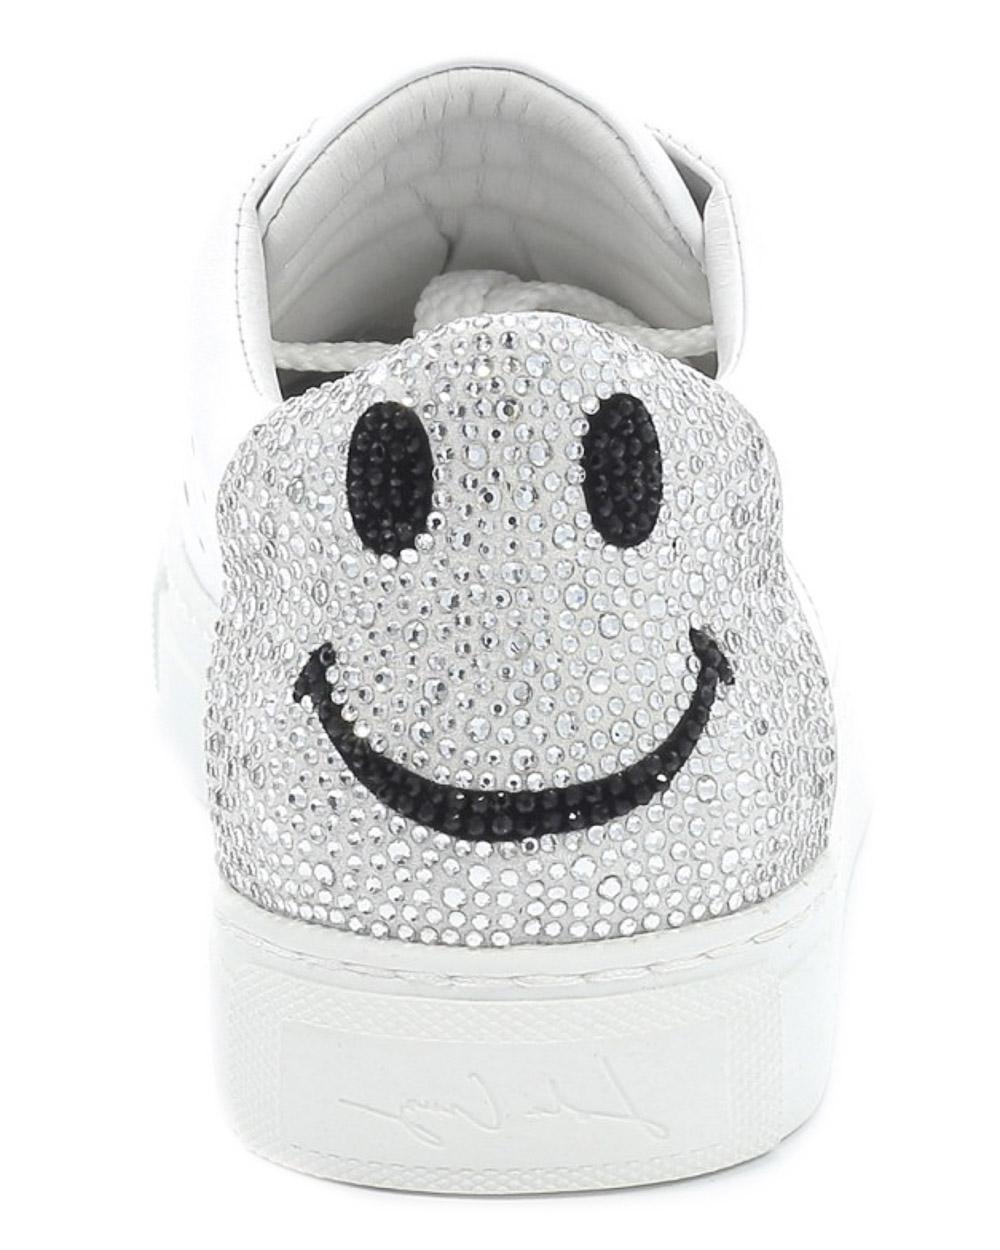 lola cruz smiley face sneakers